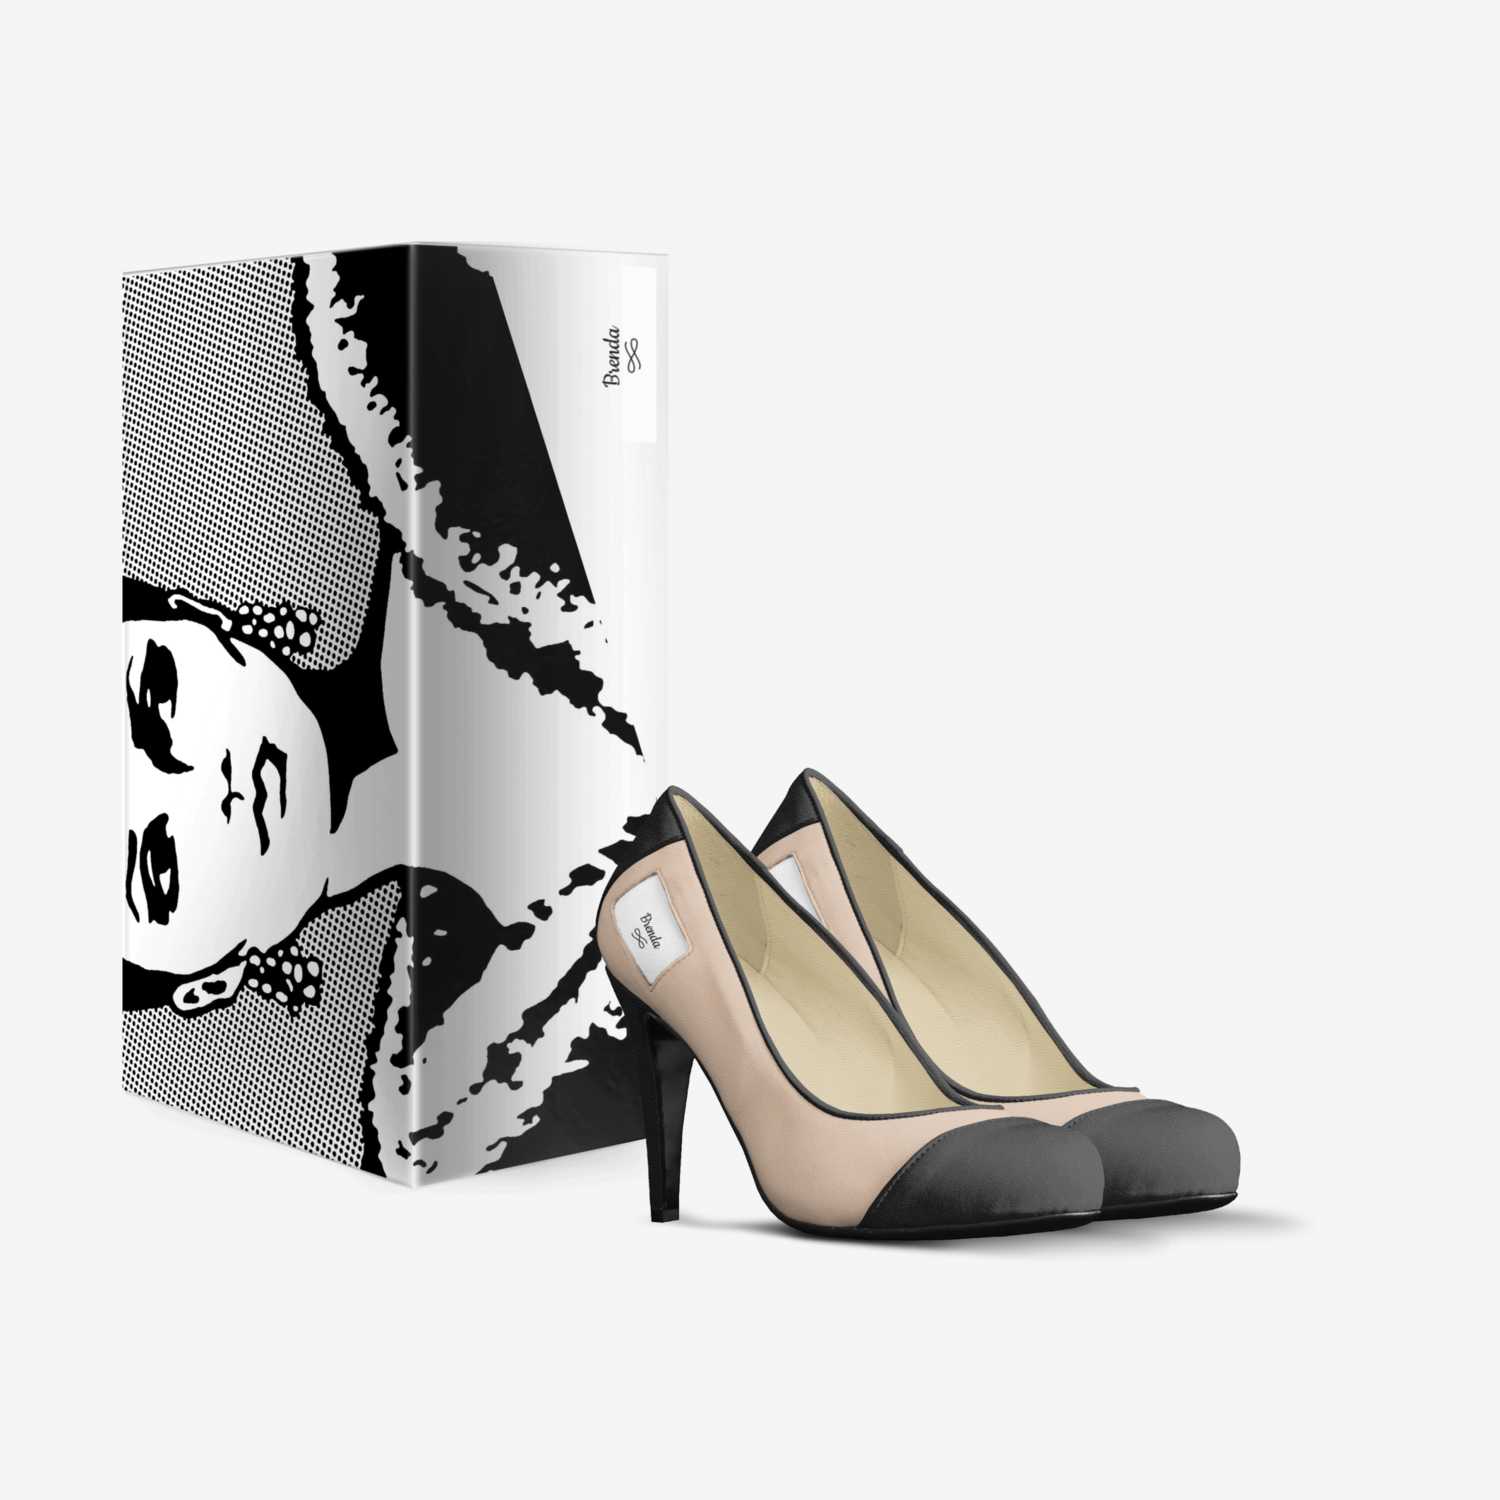 Brenda  custom made in Italy shoes by Ashiireun | Box view